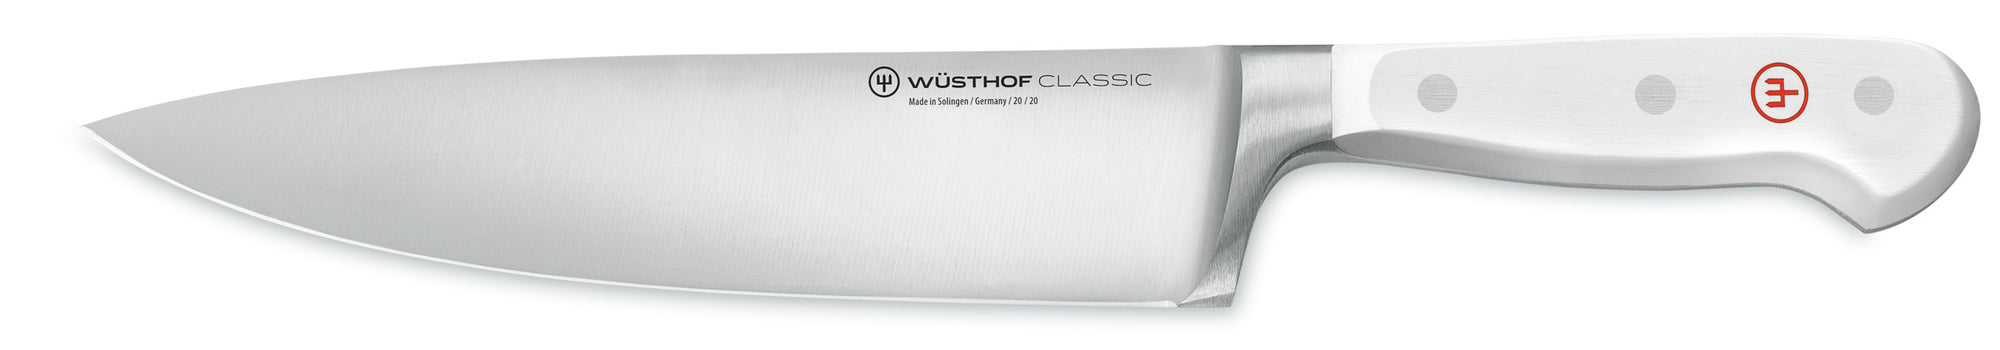 Wusthof Classic White Chef Knife 8" Canada 1040200120